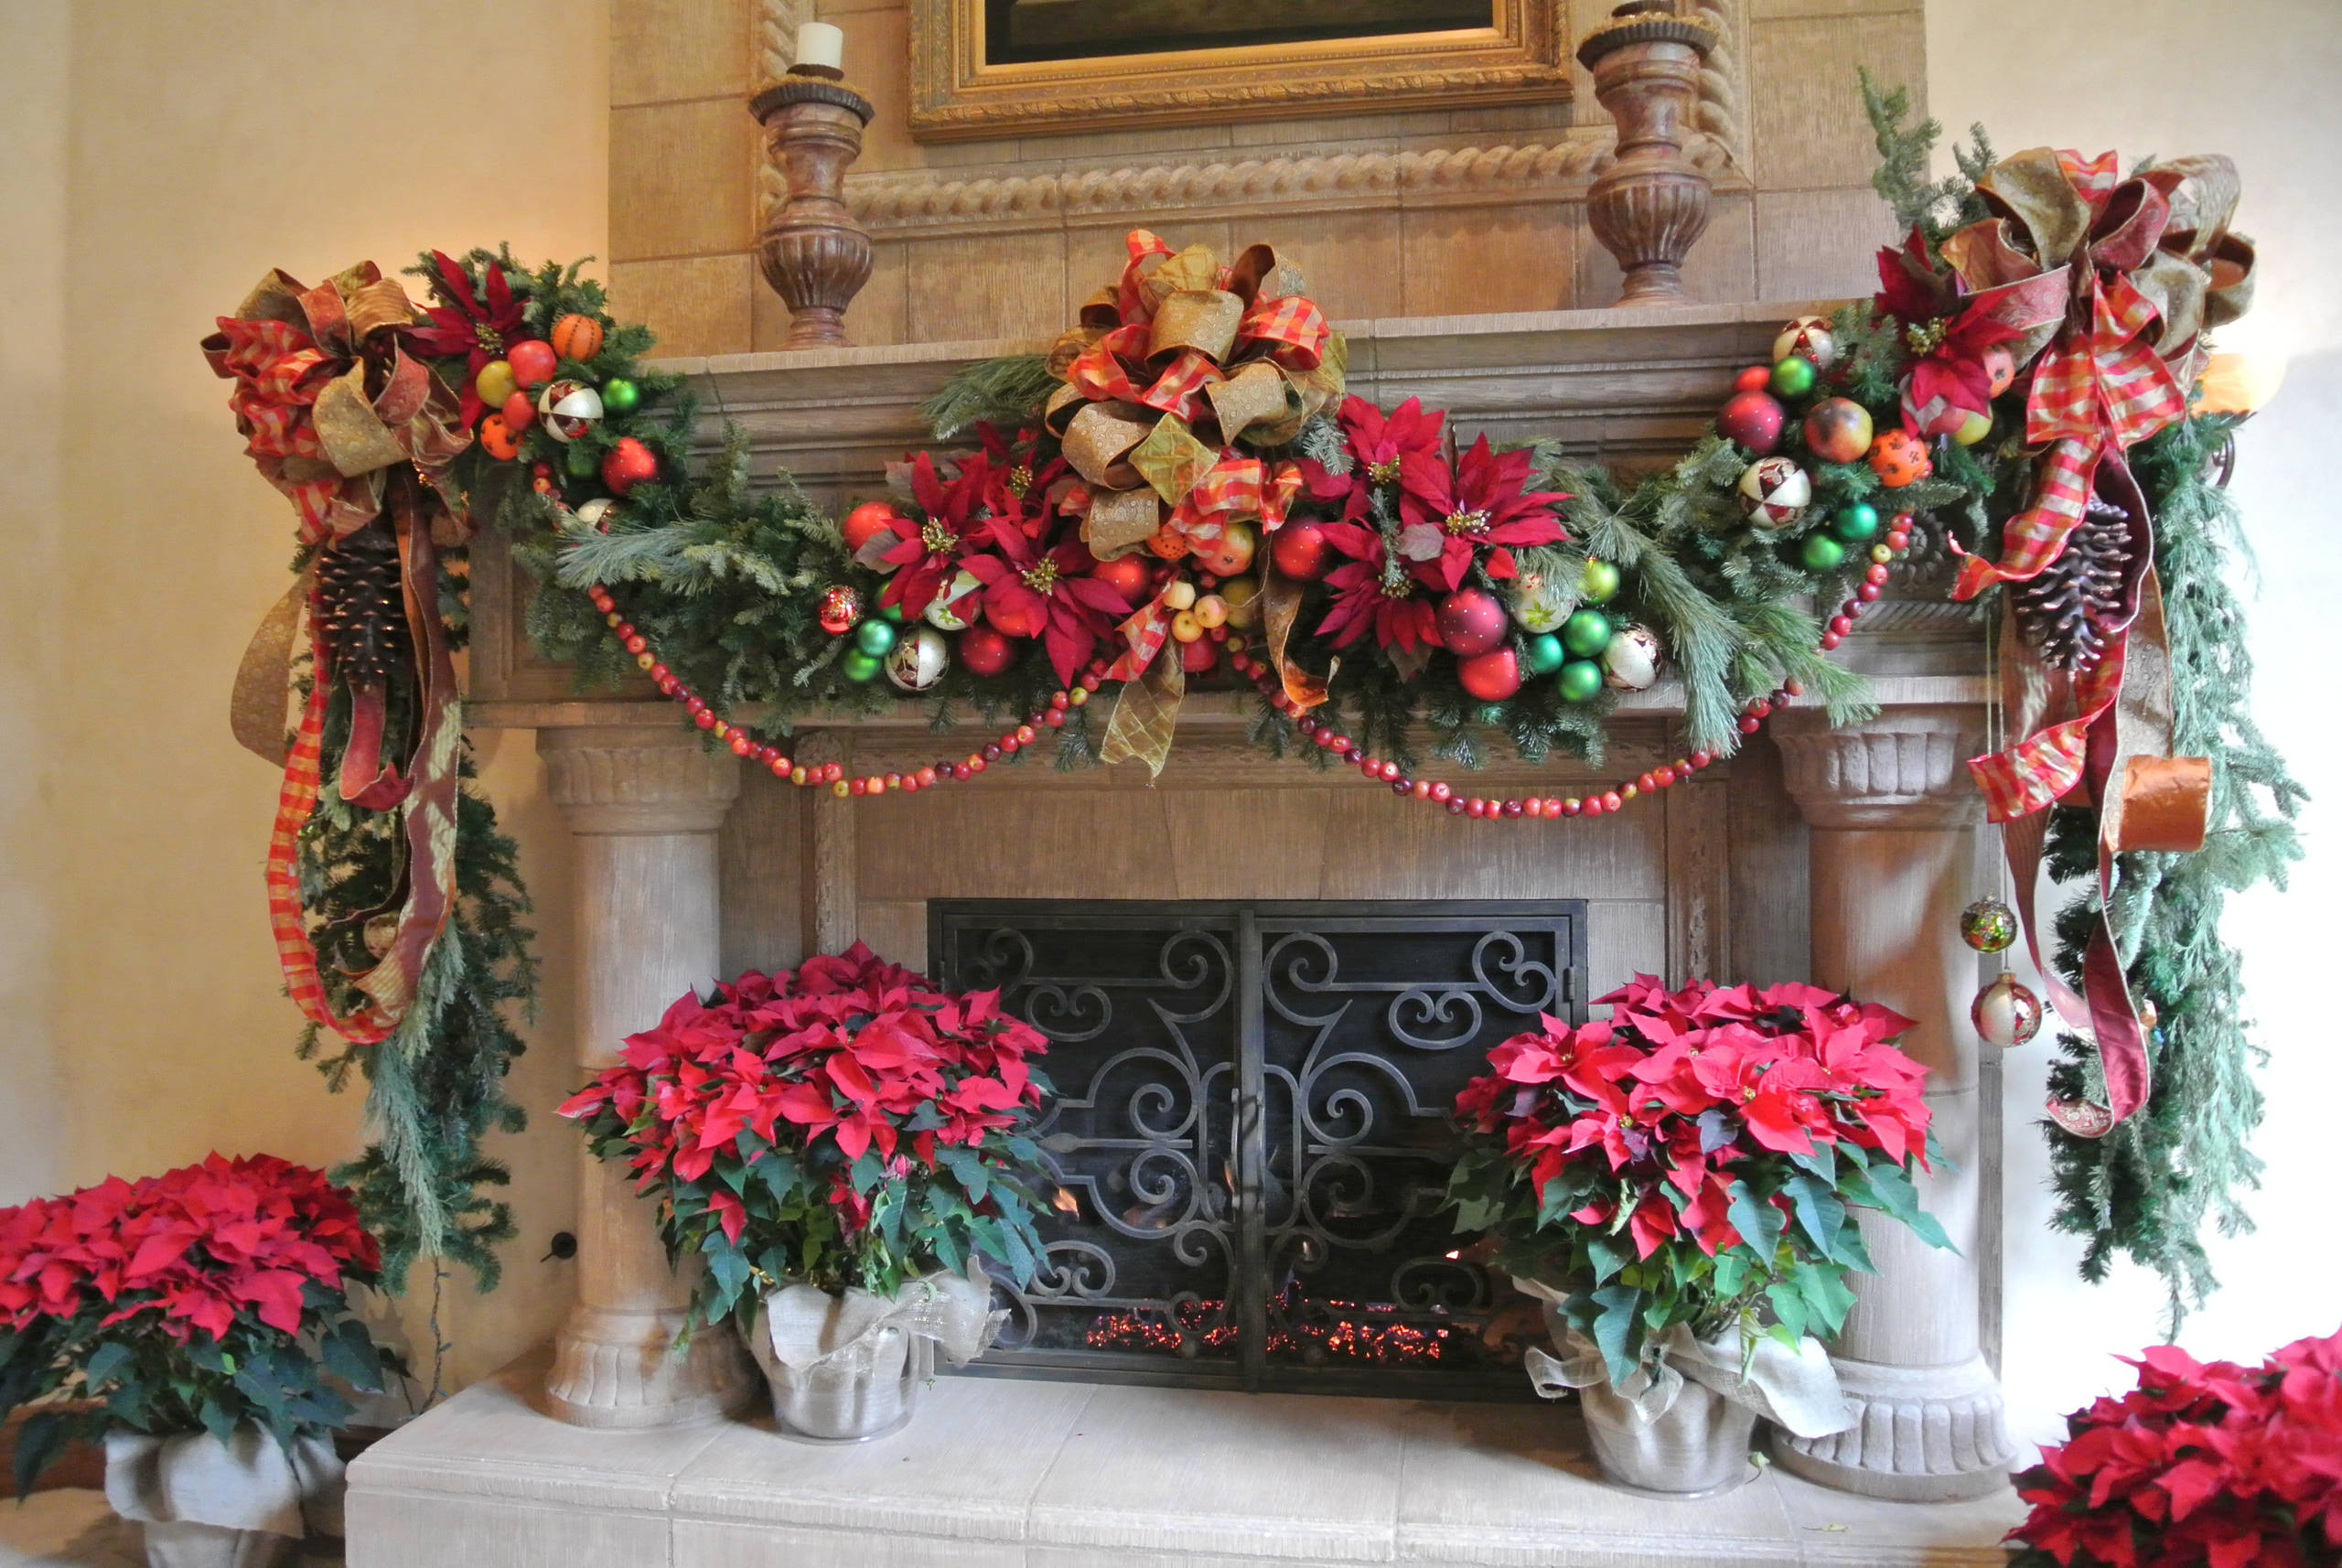 Tuscan Christmas Decoration - Photos & Ideas | Houzz